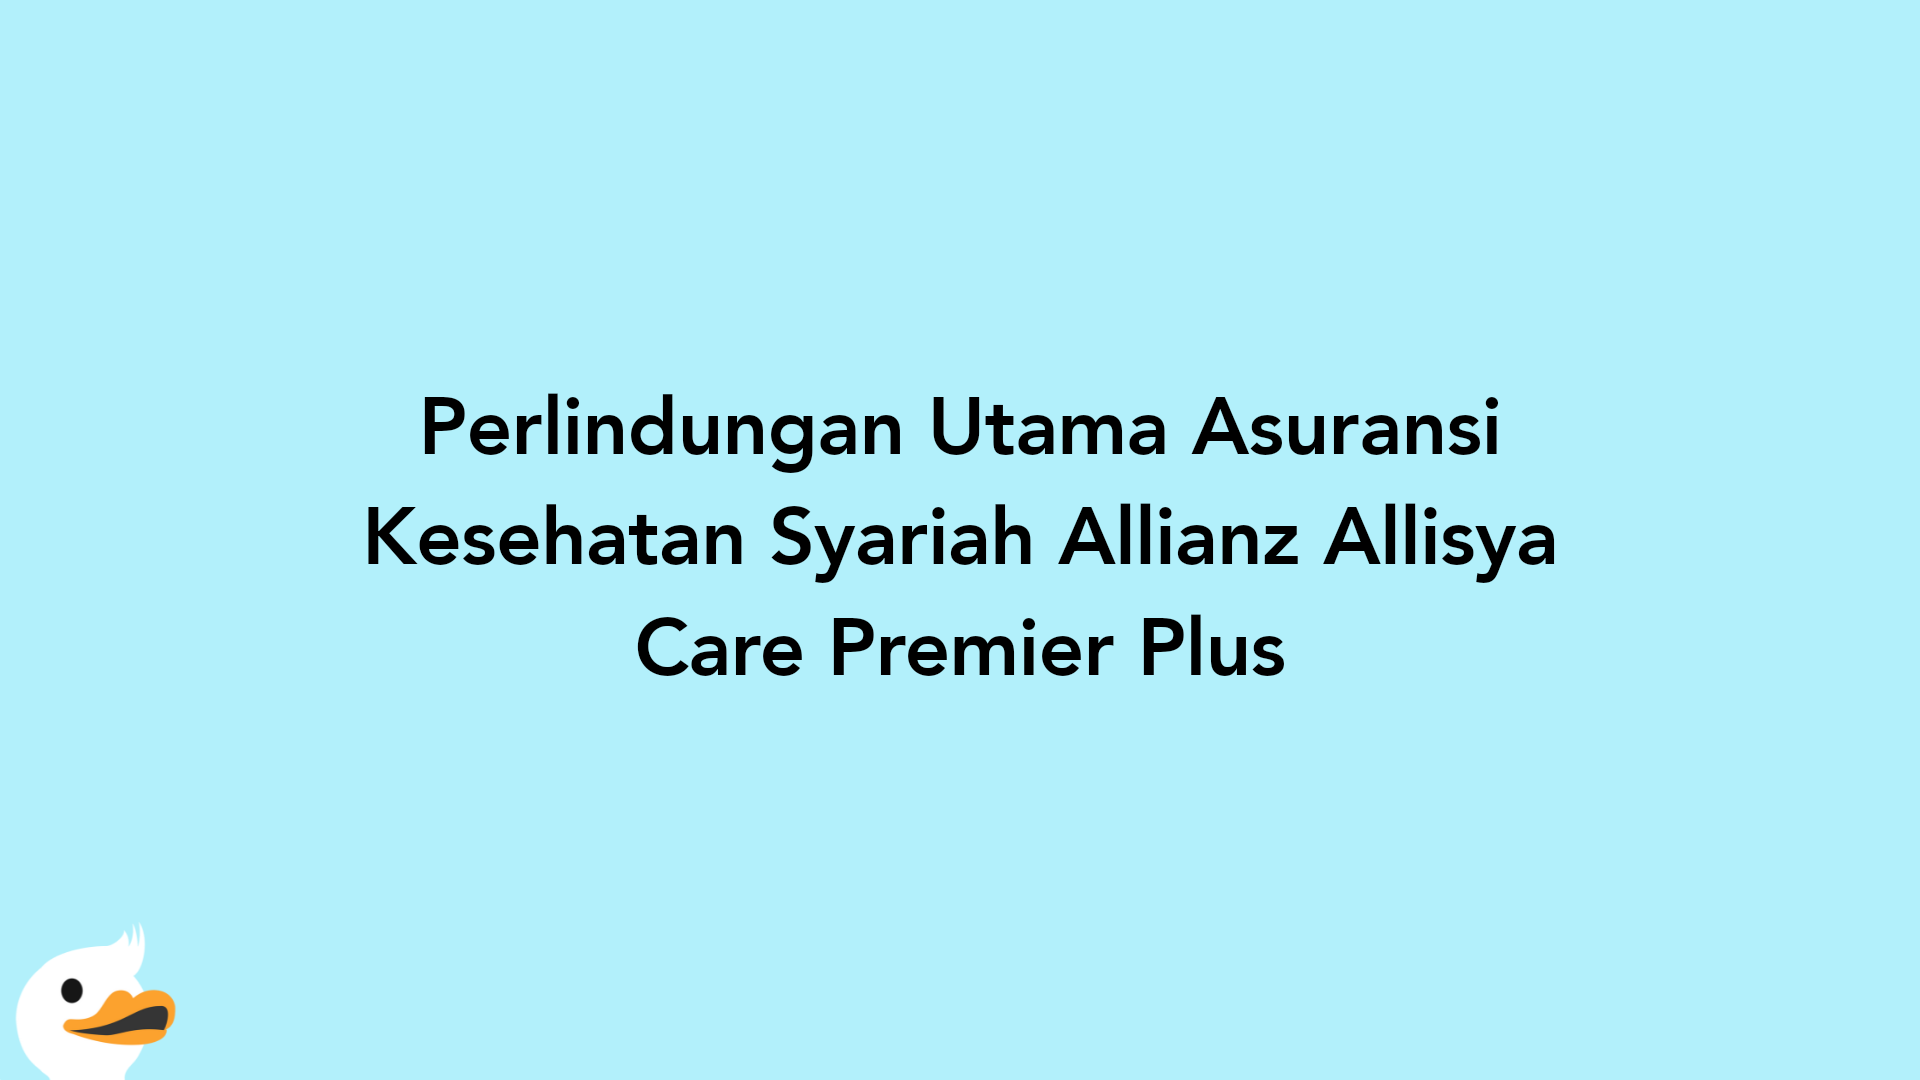 Perlindungan Utama Asuransi Kesehatan Syariah Allianz Allisya Care Premier Plus